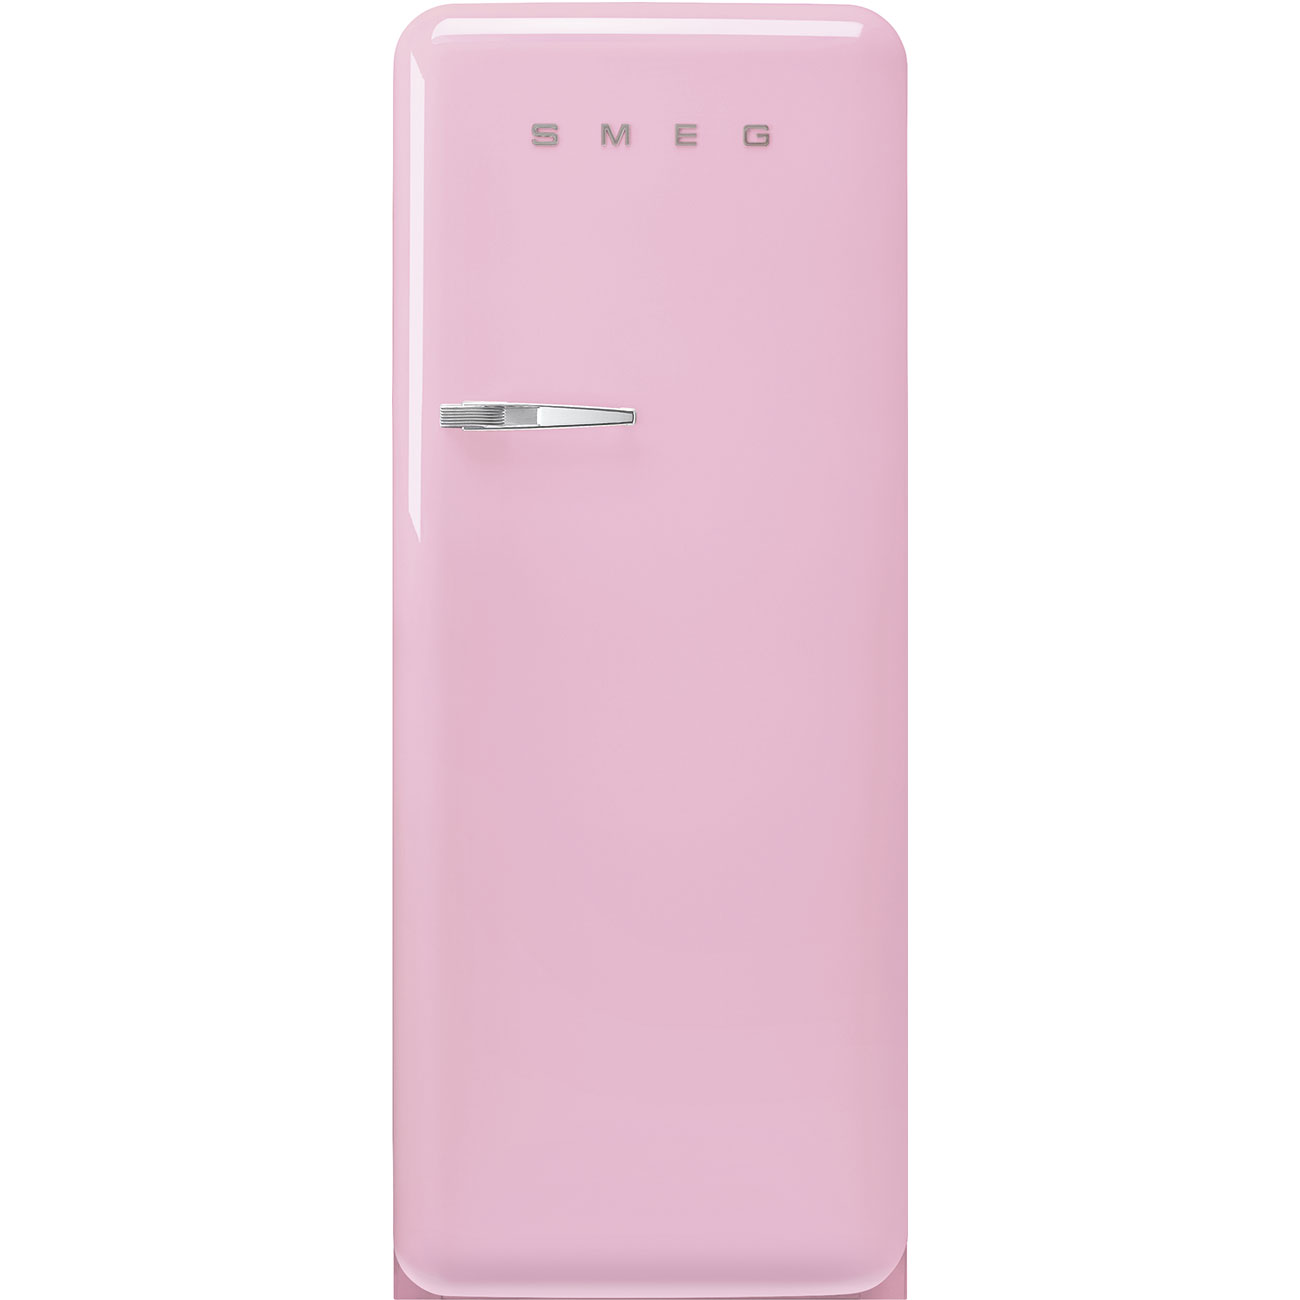 Roze koelkast - Smeg_1